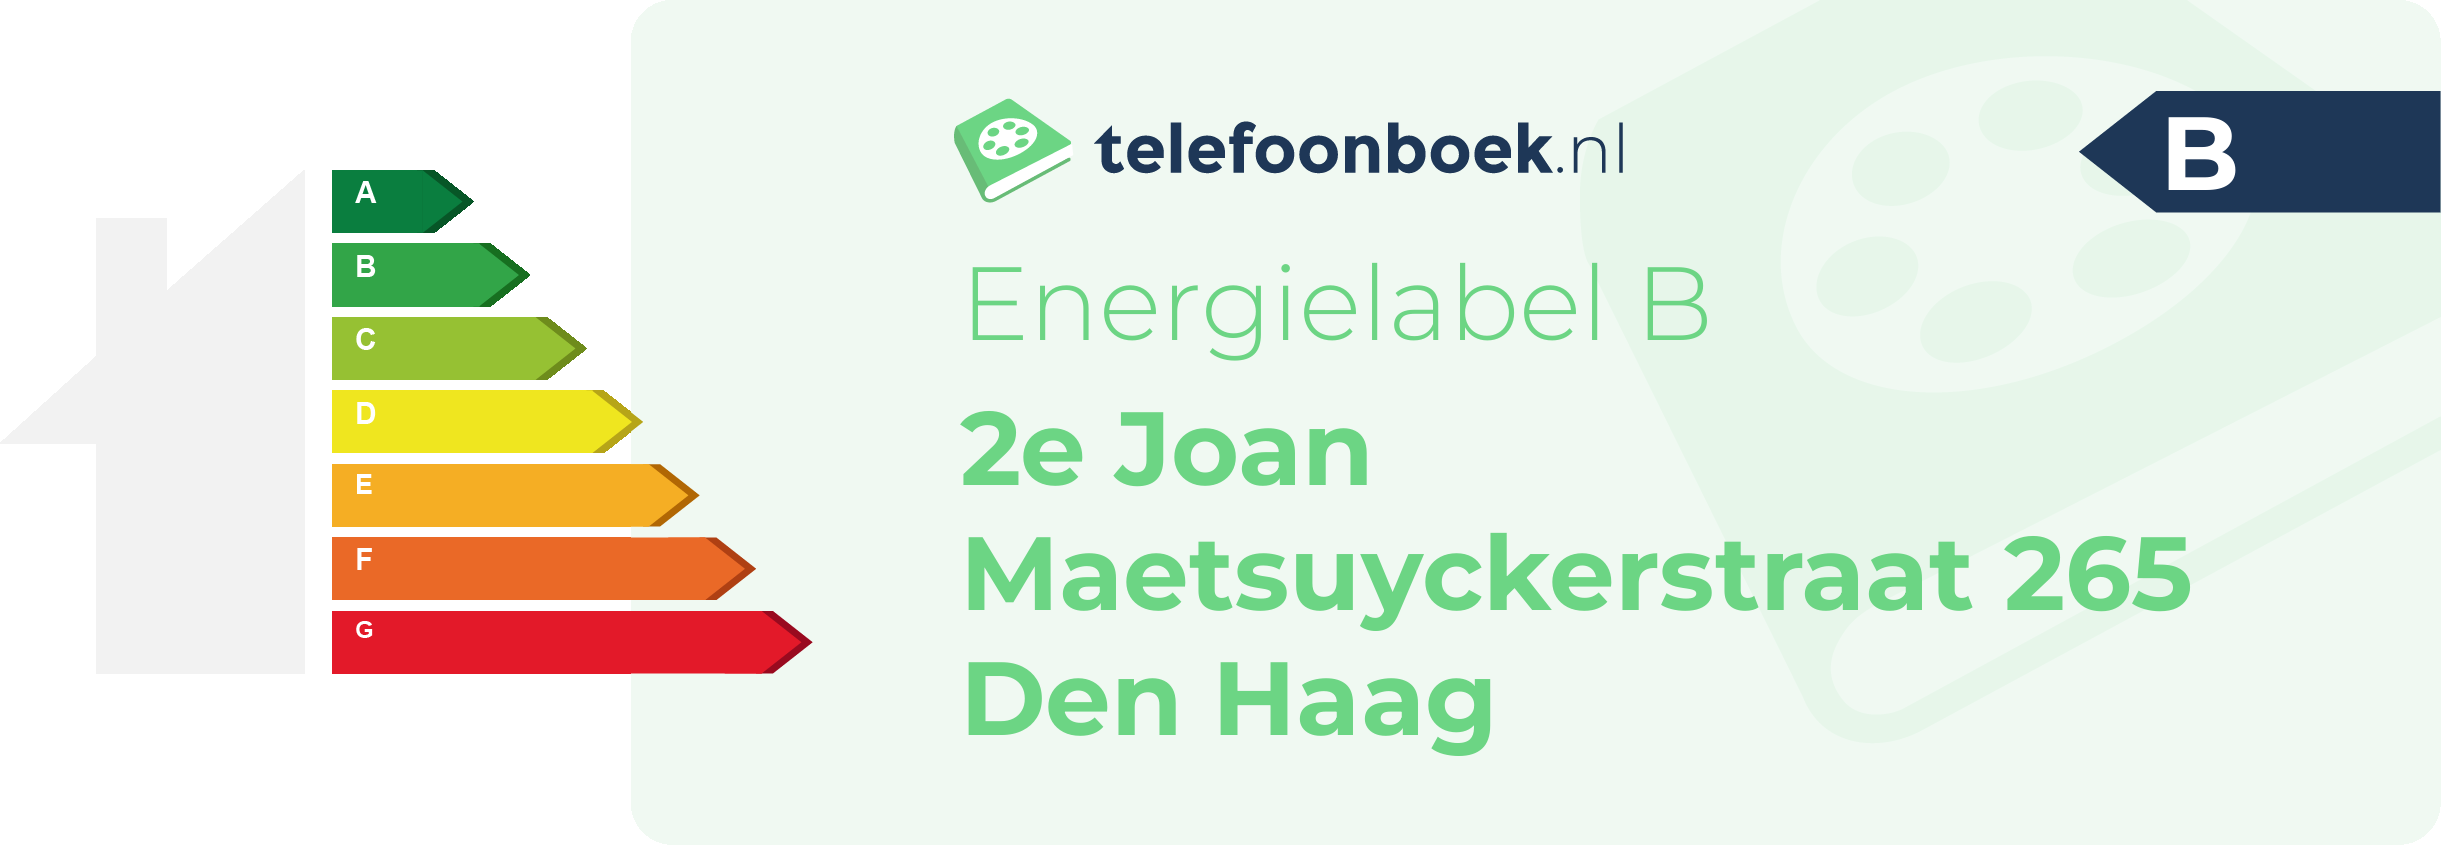 Energielabel 2e Joan Maetsuyckerstraat 265 Den Haag